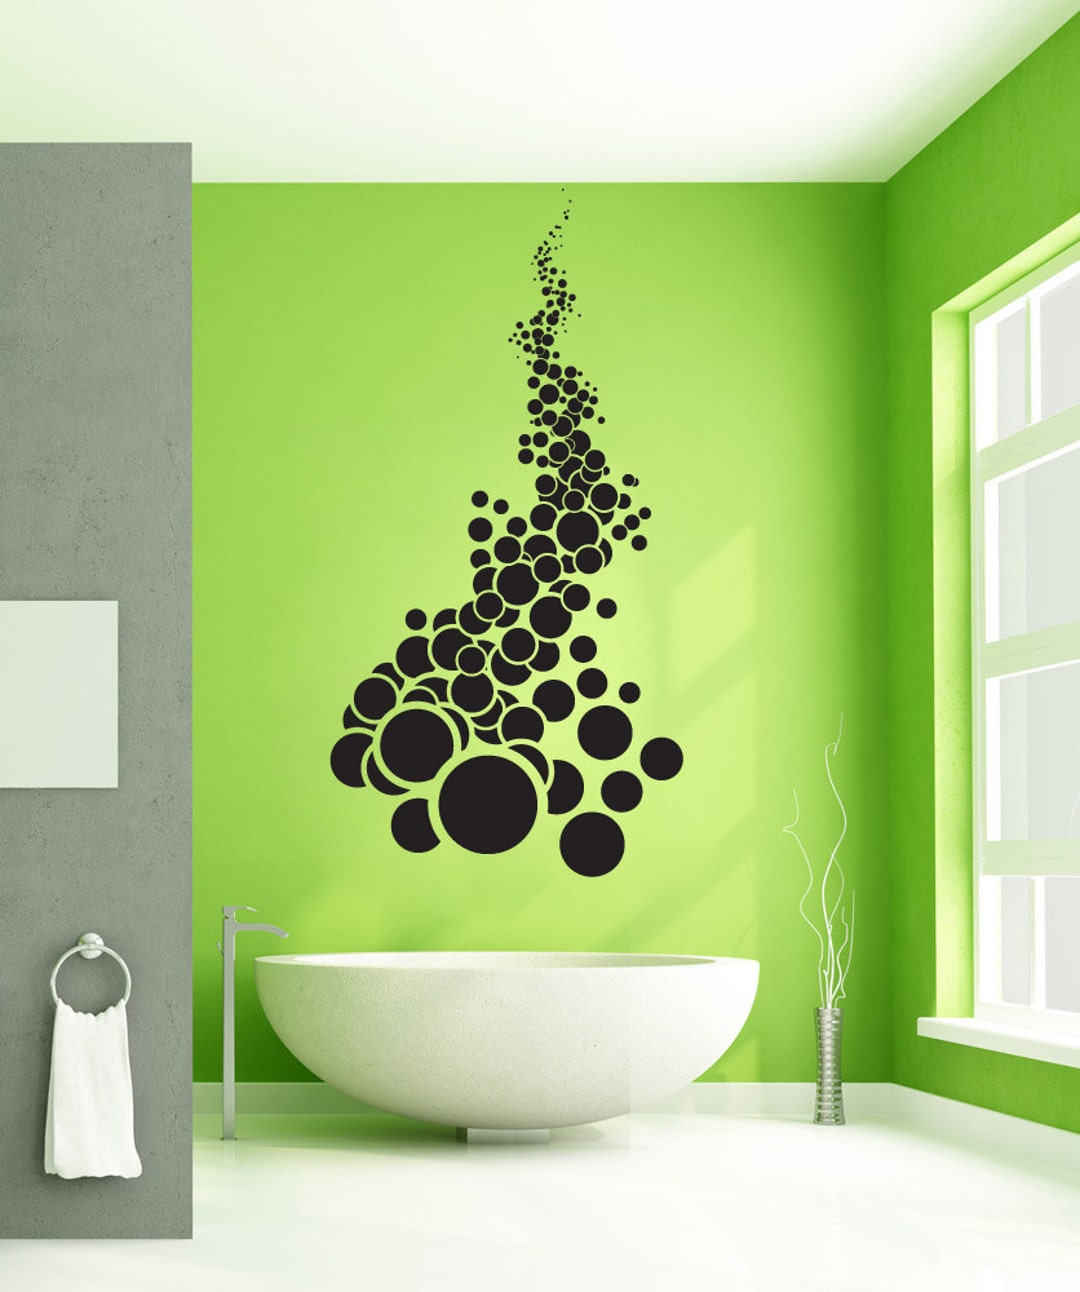 White Marble Stone Granite Slate Peel and Stick Wallpaper Removable Wall  Mural Bedroom Wallpaper Bathroom Decor Home Kitchen Wallpaper 6180 